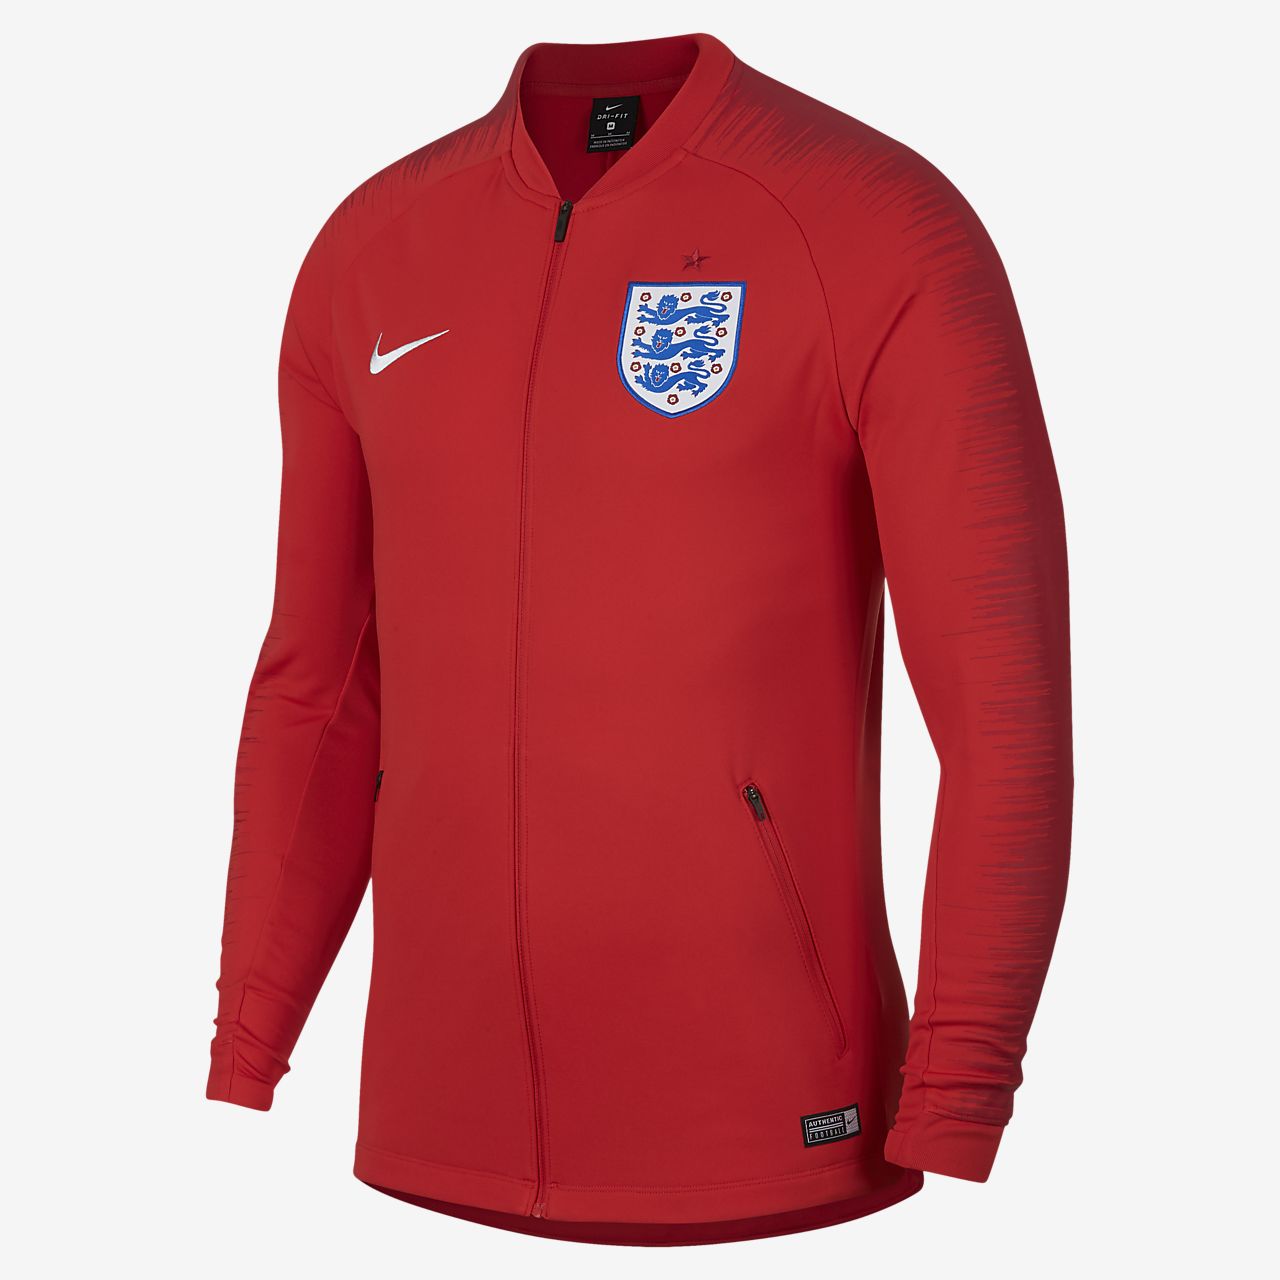 england long sleeve football shirt